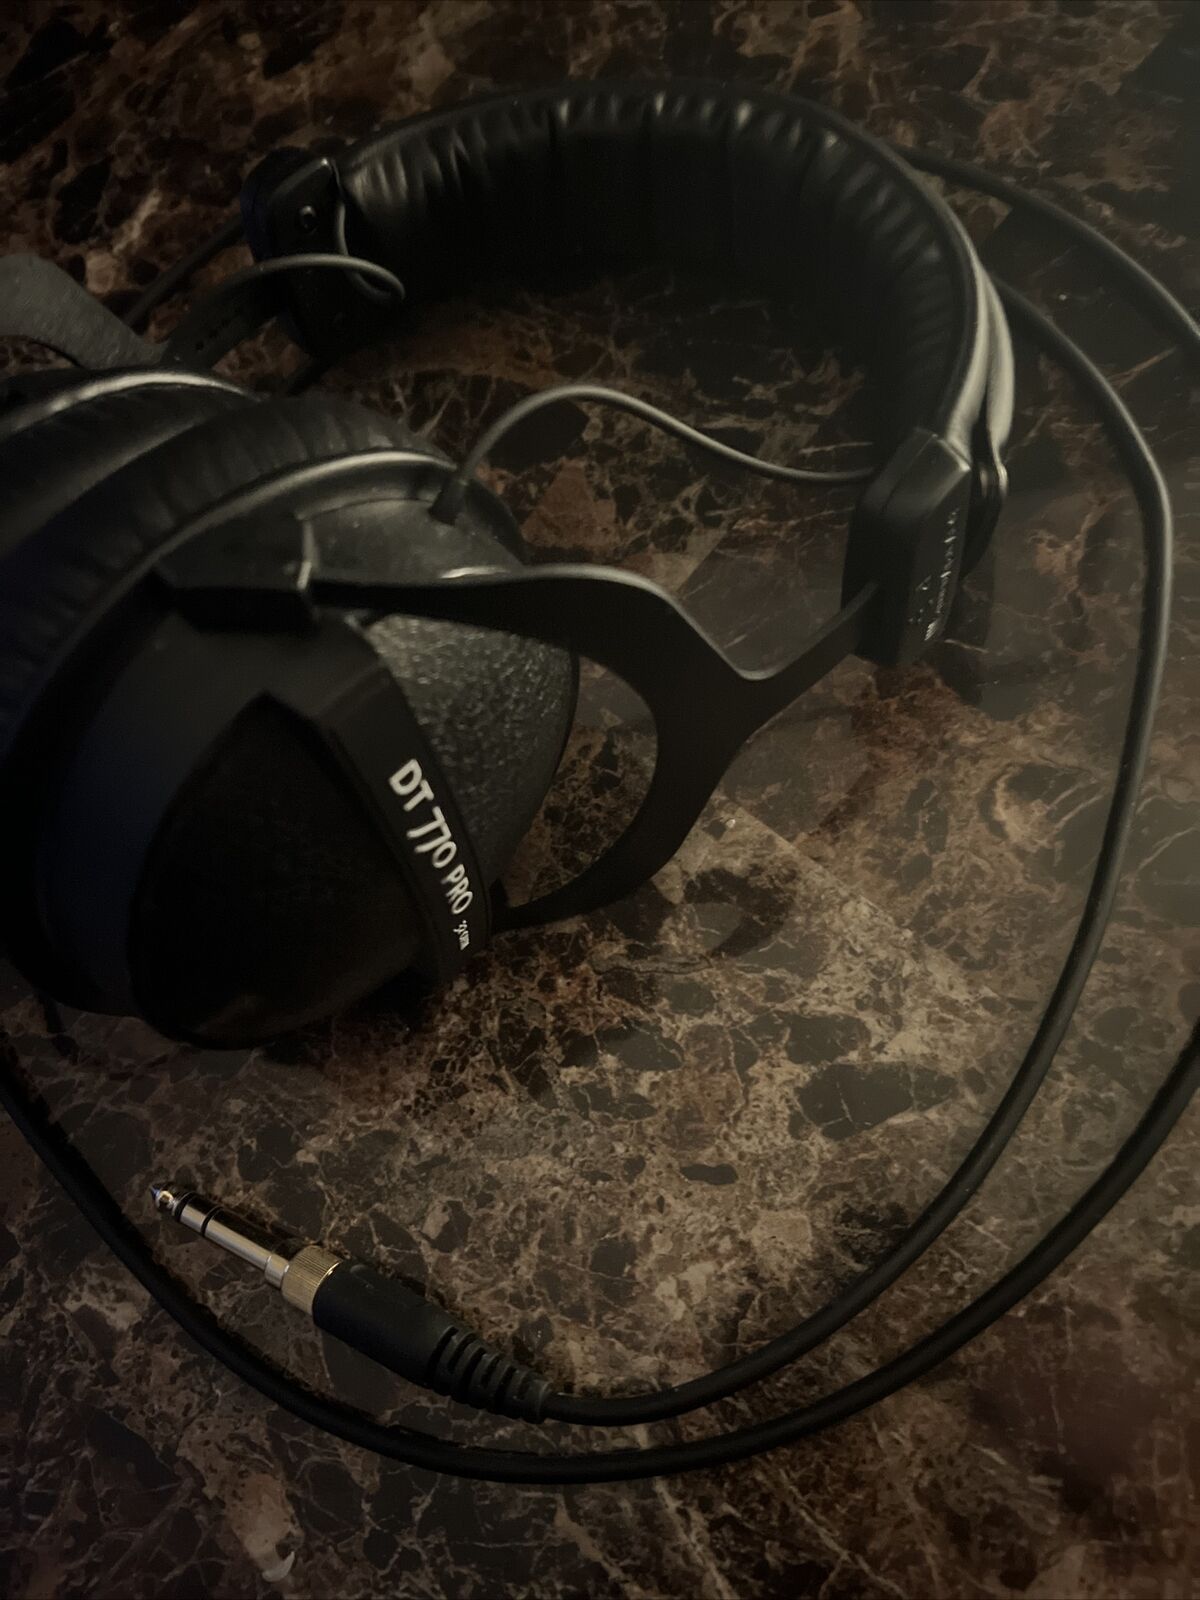 Beyerdynamic Dt 770 Pro Studio Headphones 32 Ohm - Black Used But Mint!